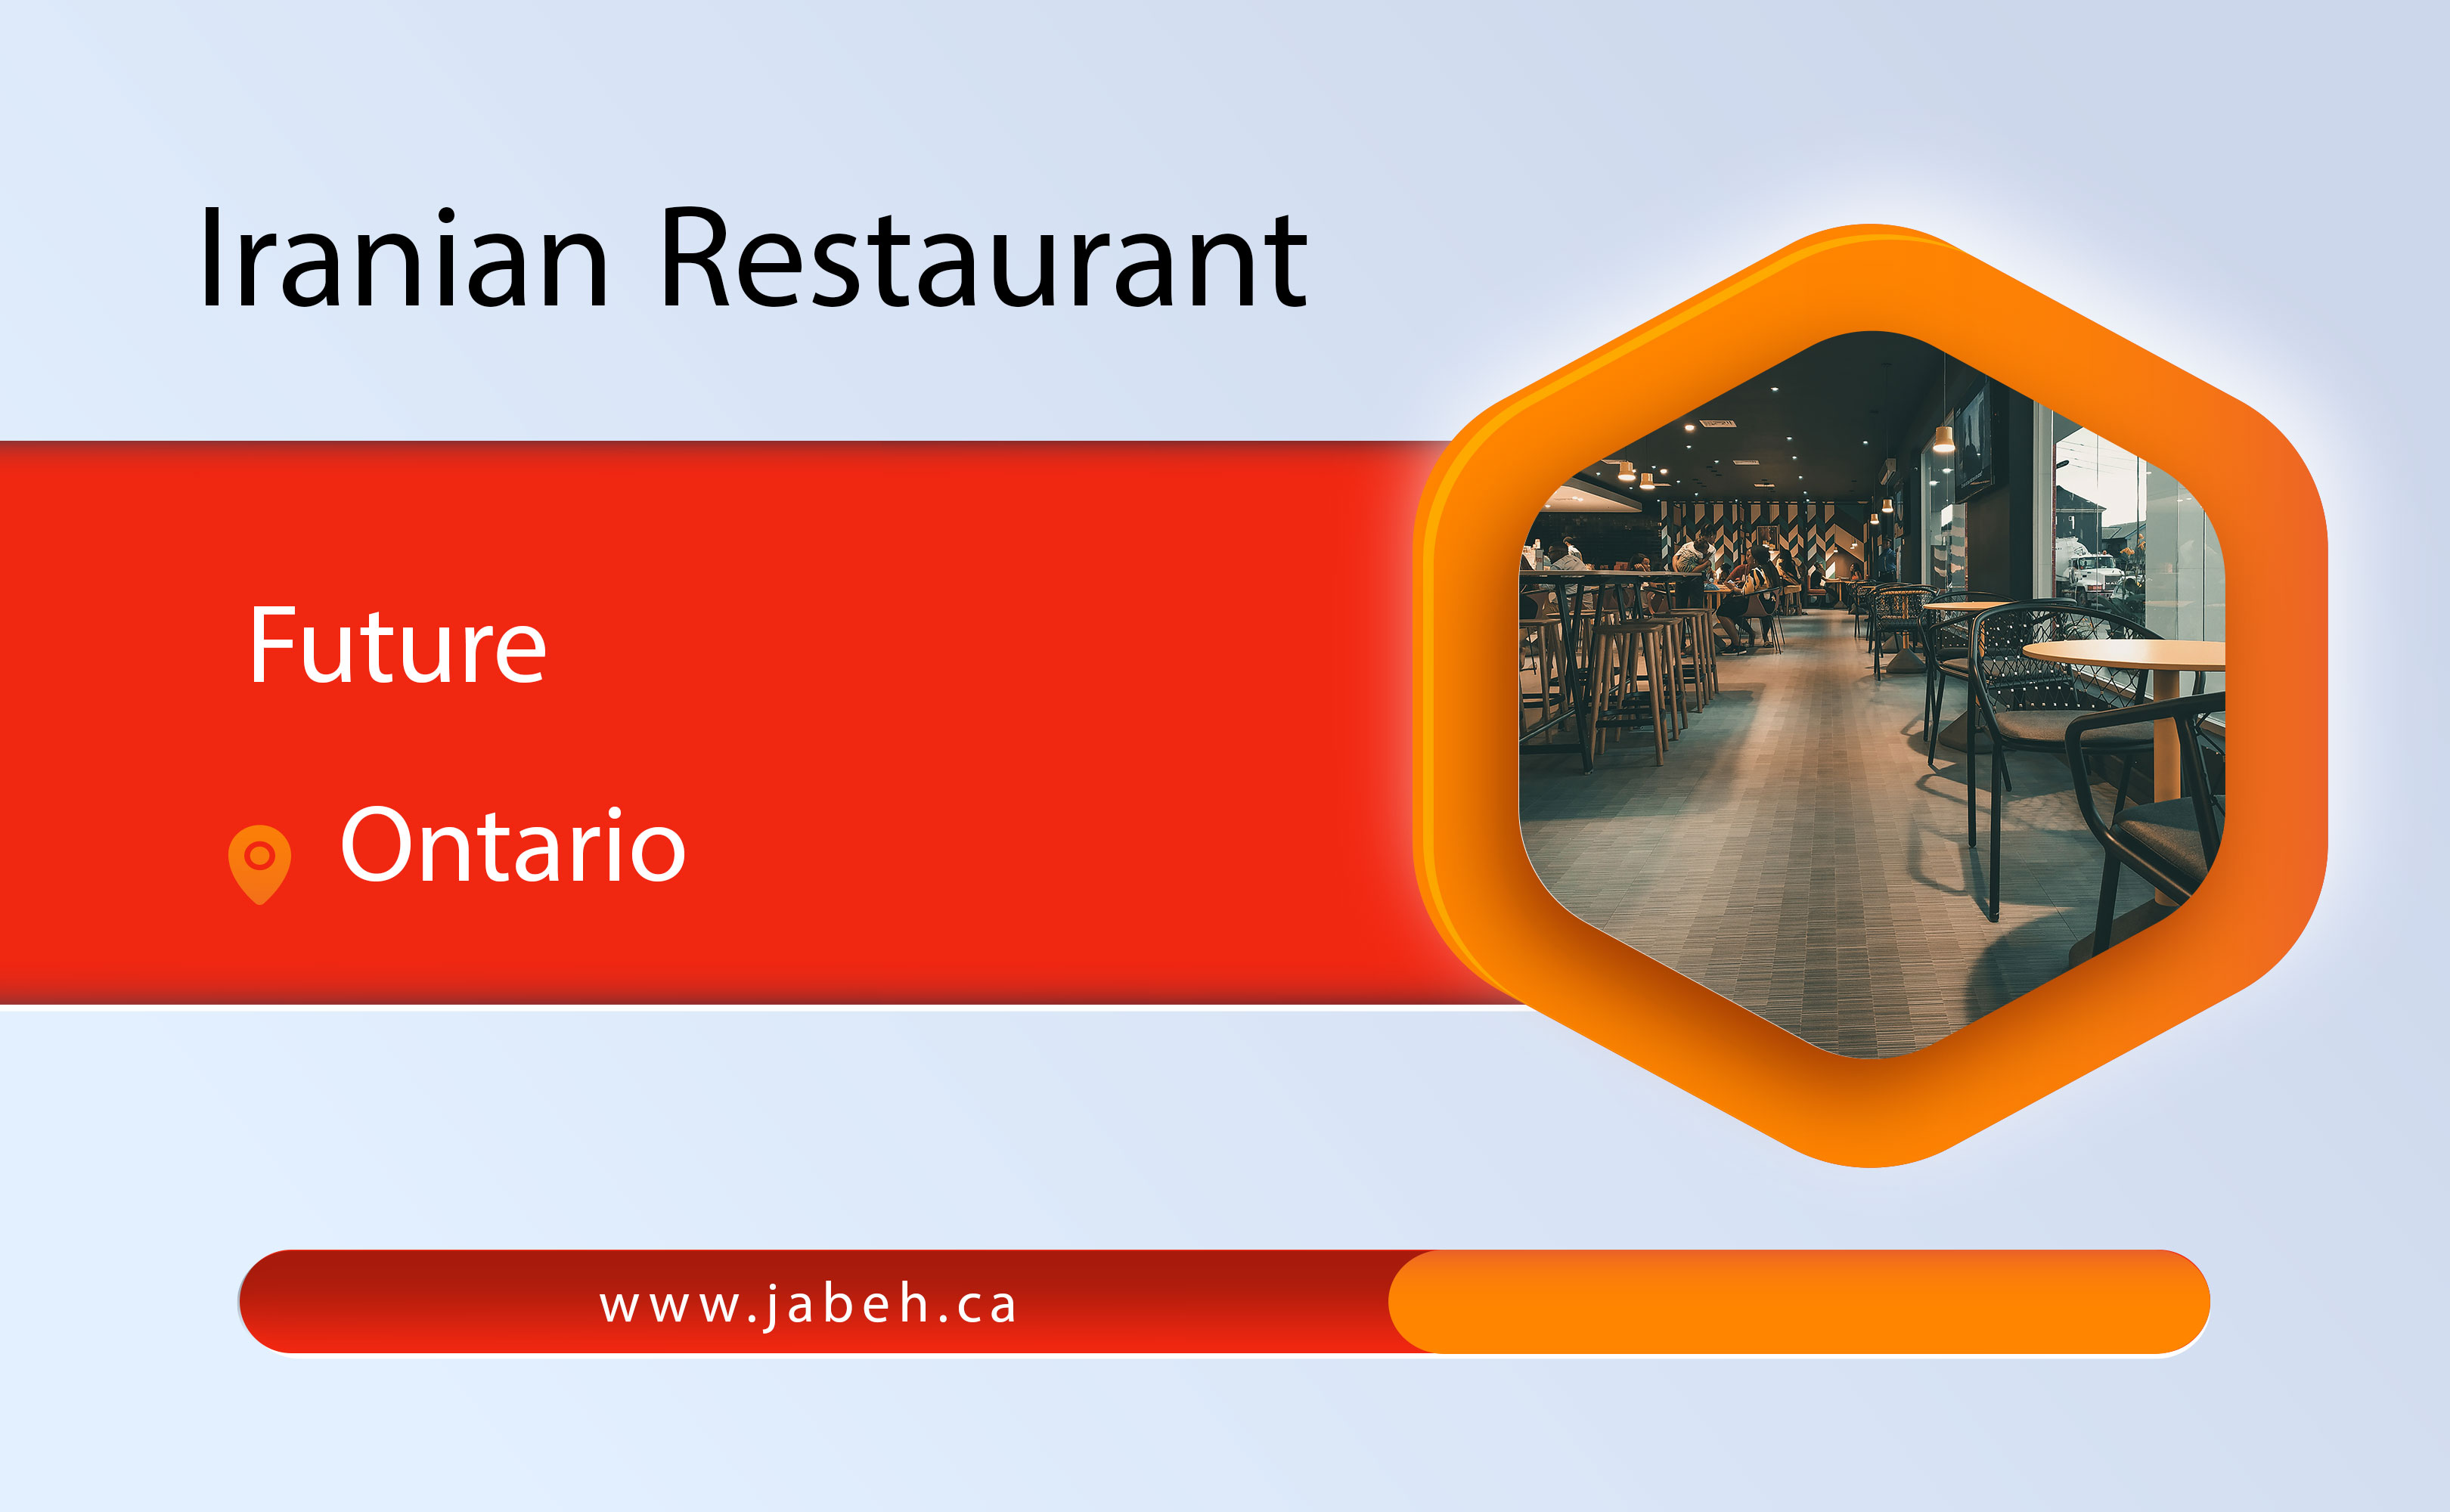 Upcoming Irani restaurant in Ontario